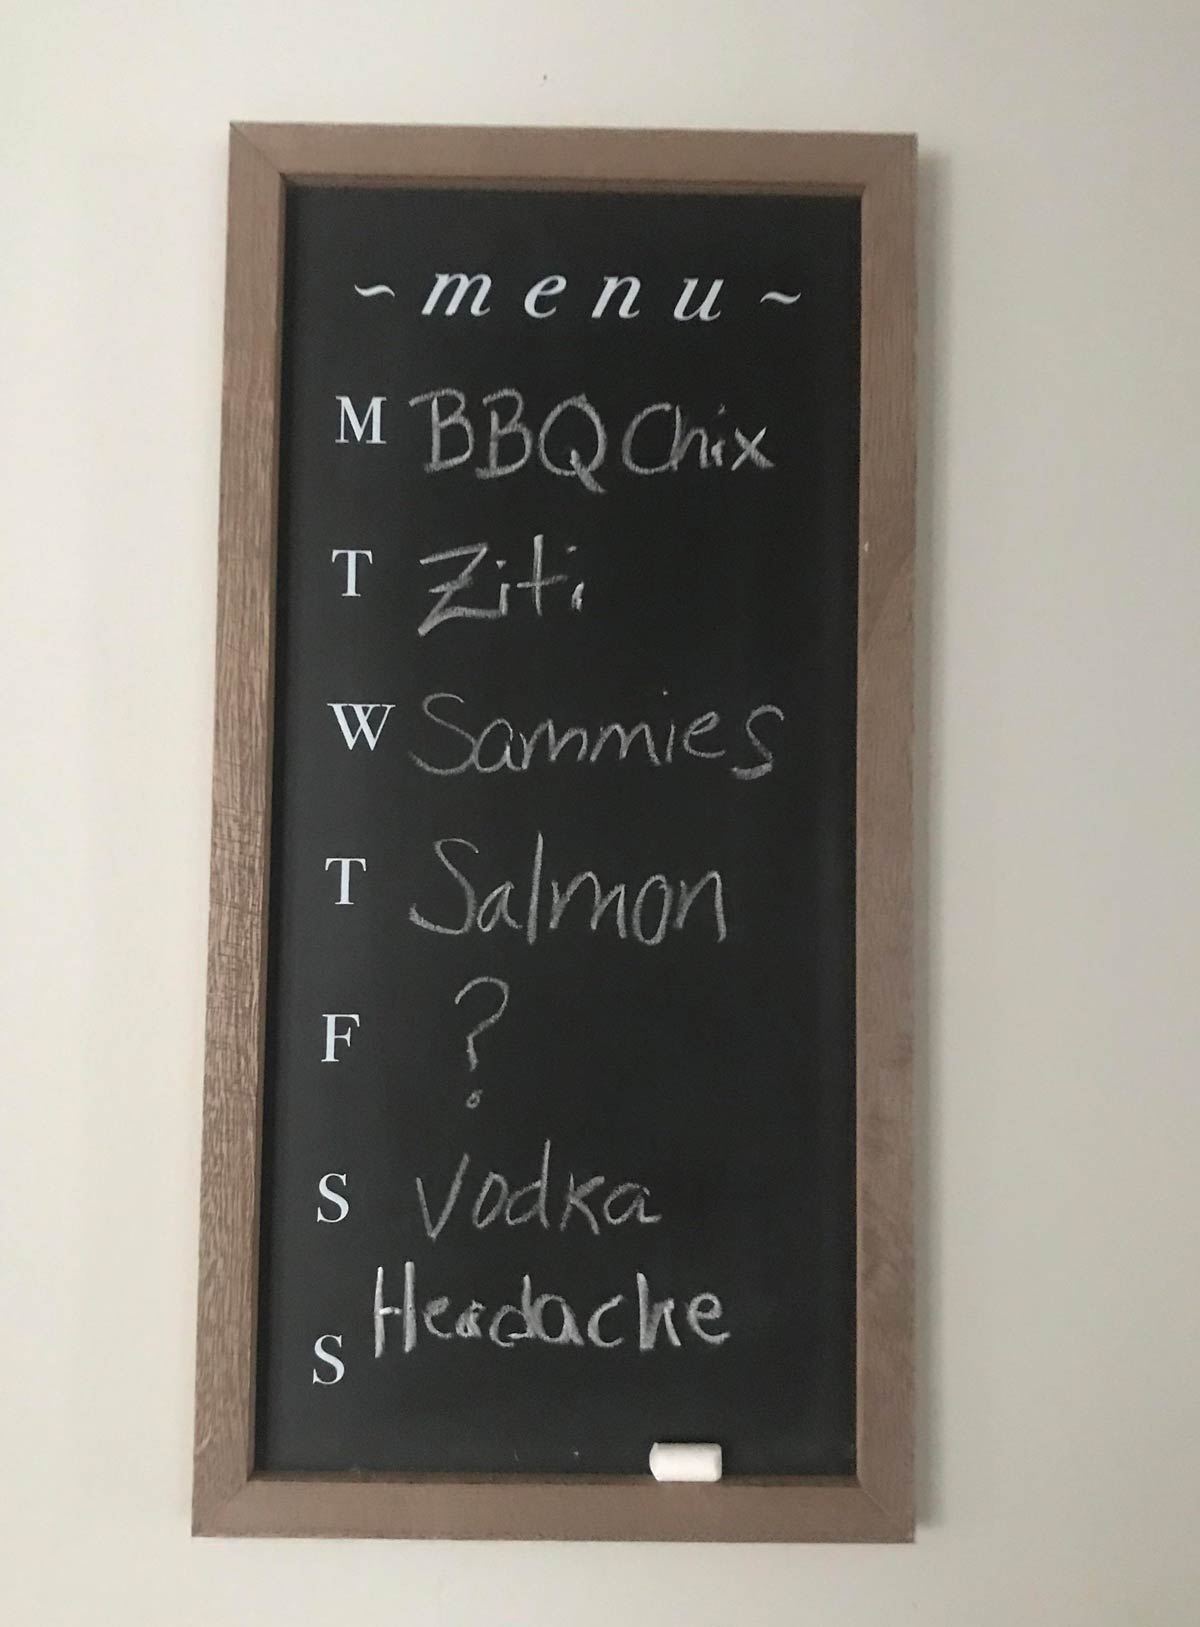 My mom's menu board in the kitchen